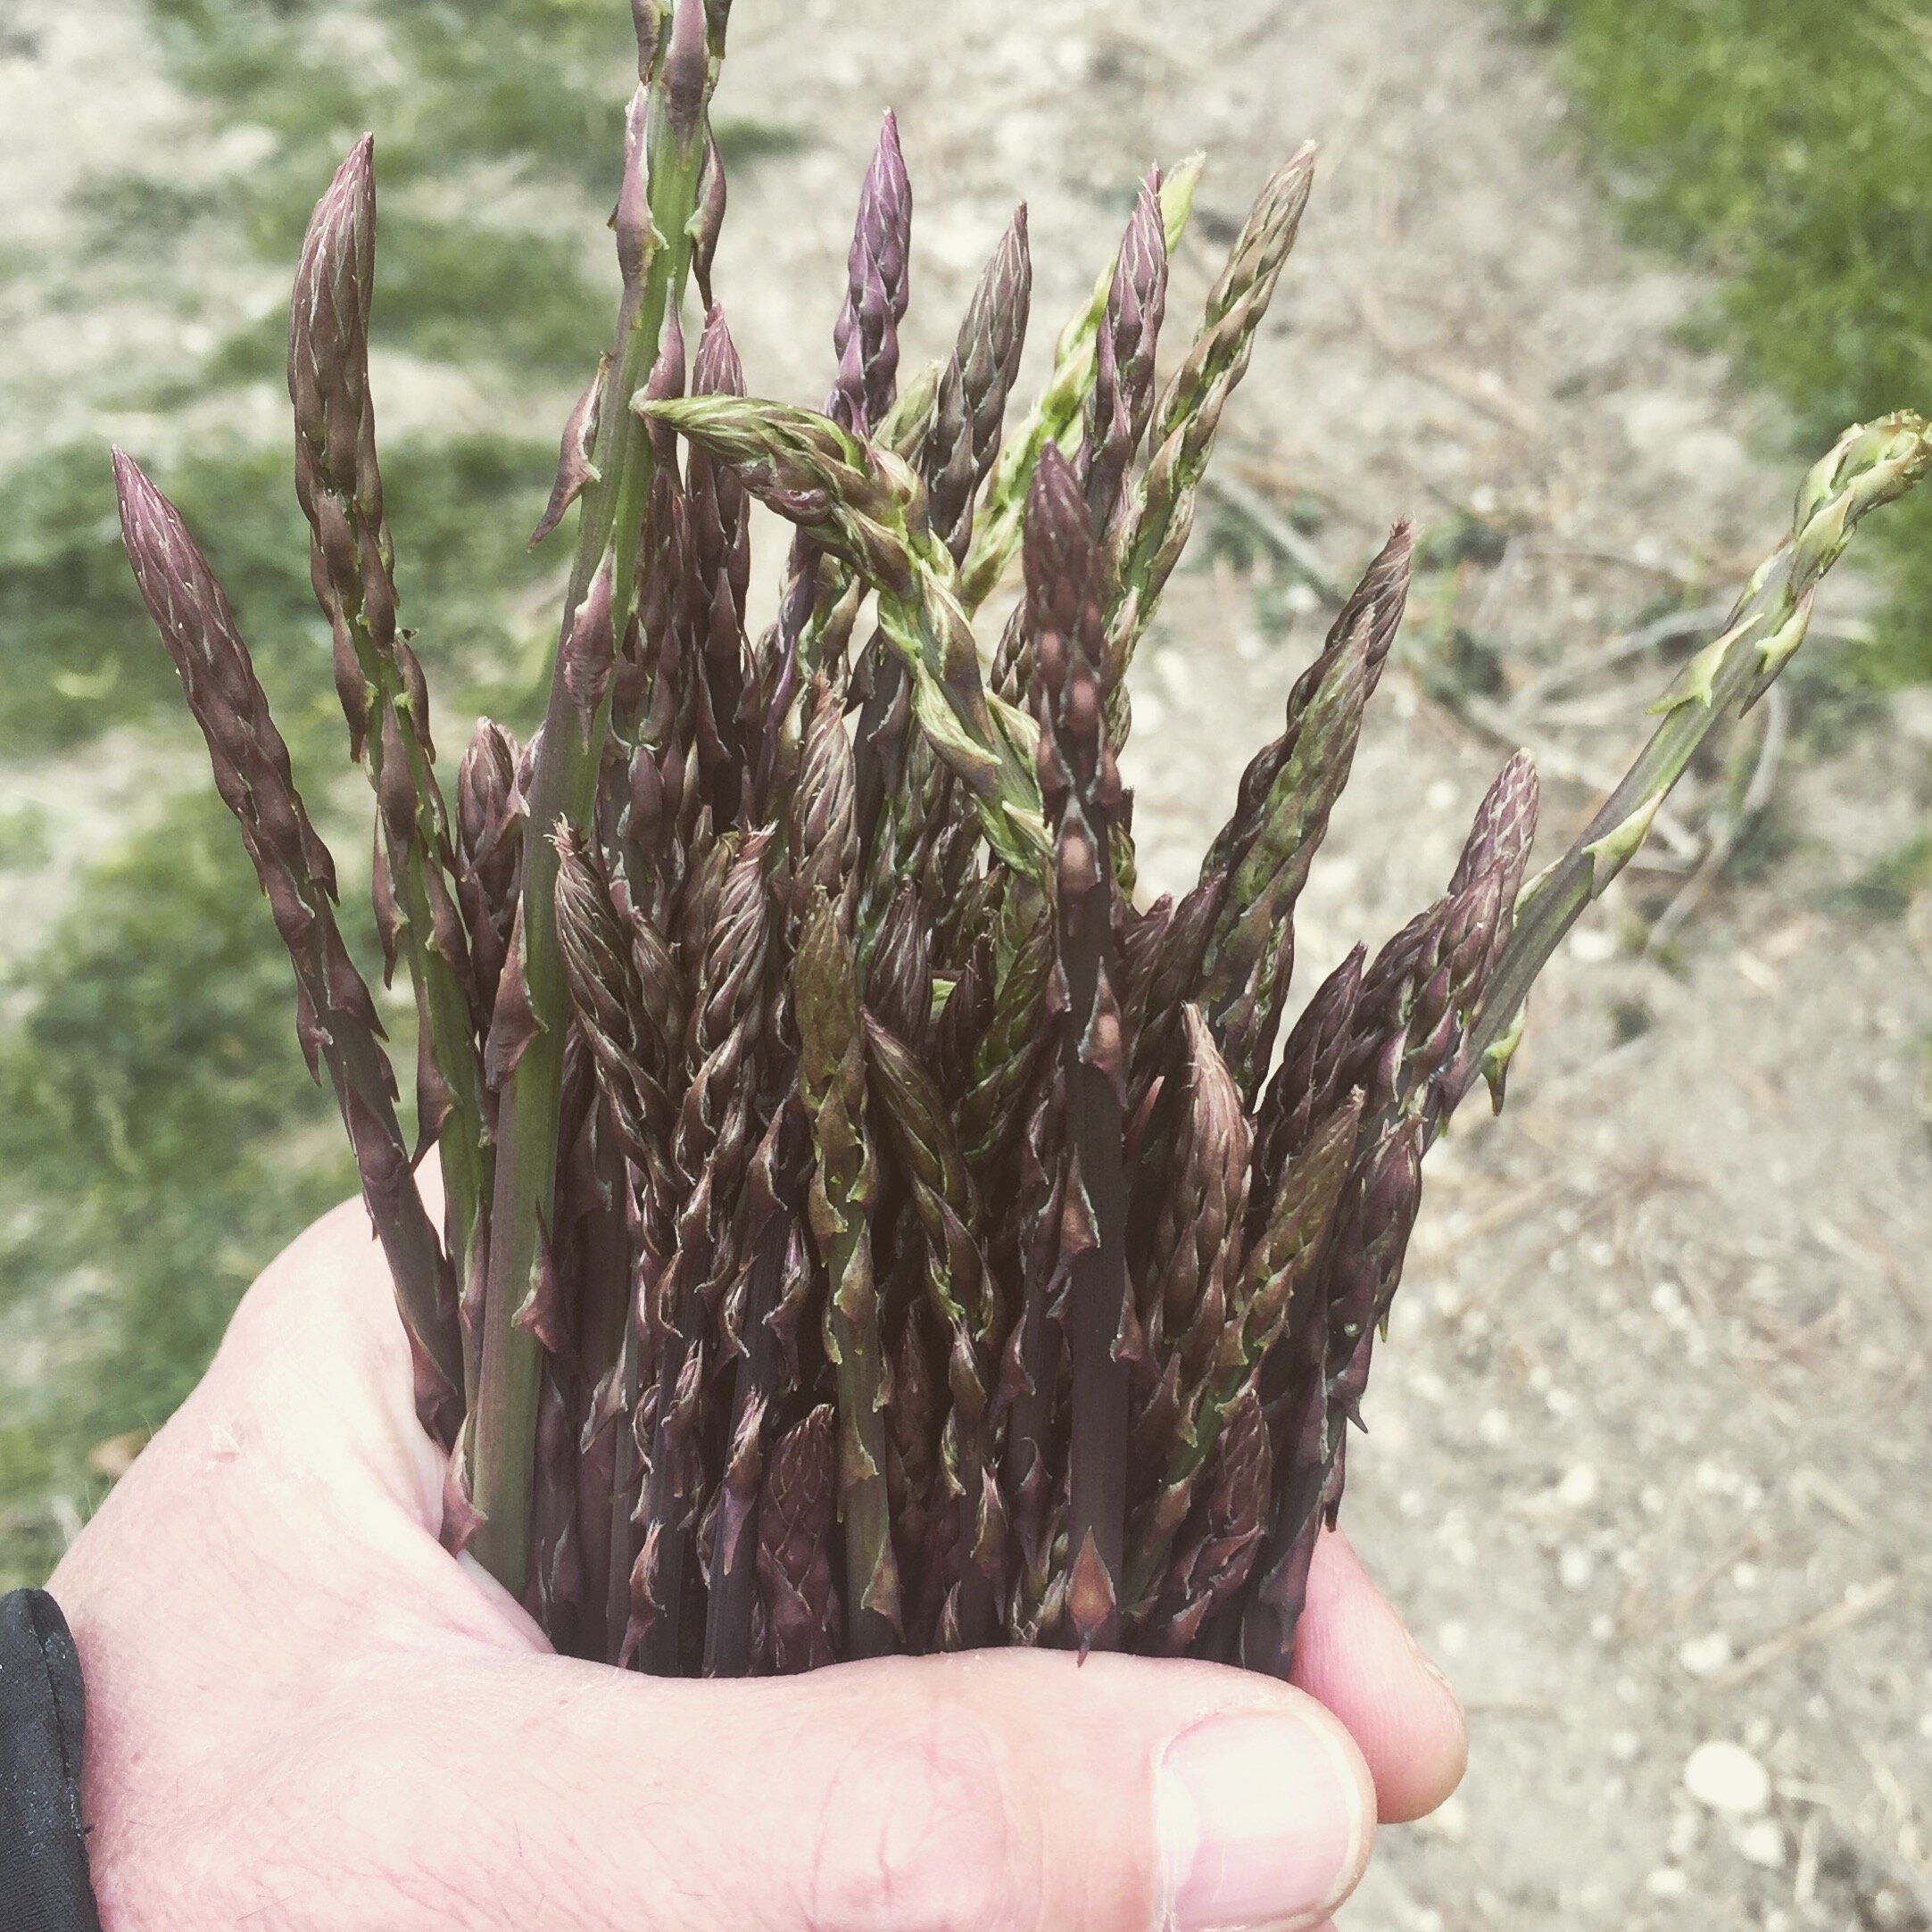 Foraged wild asparagus in Tarano, Italy